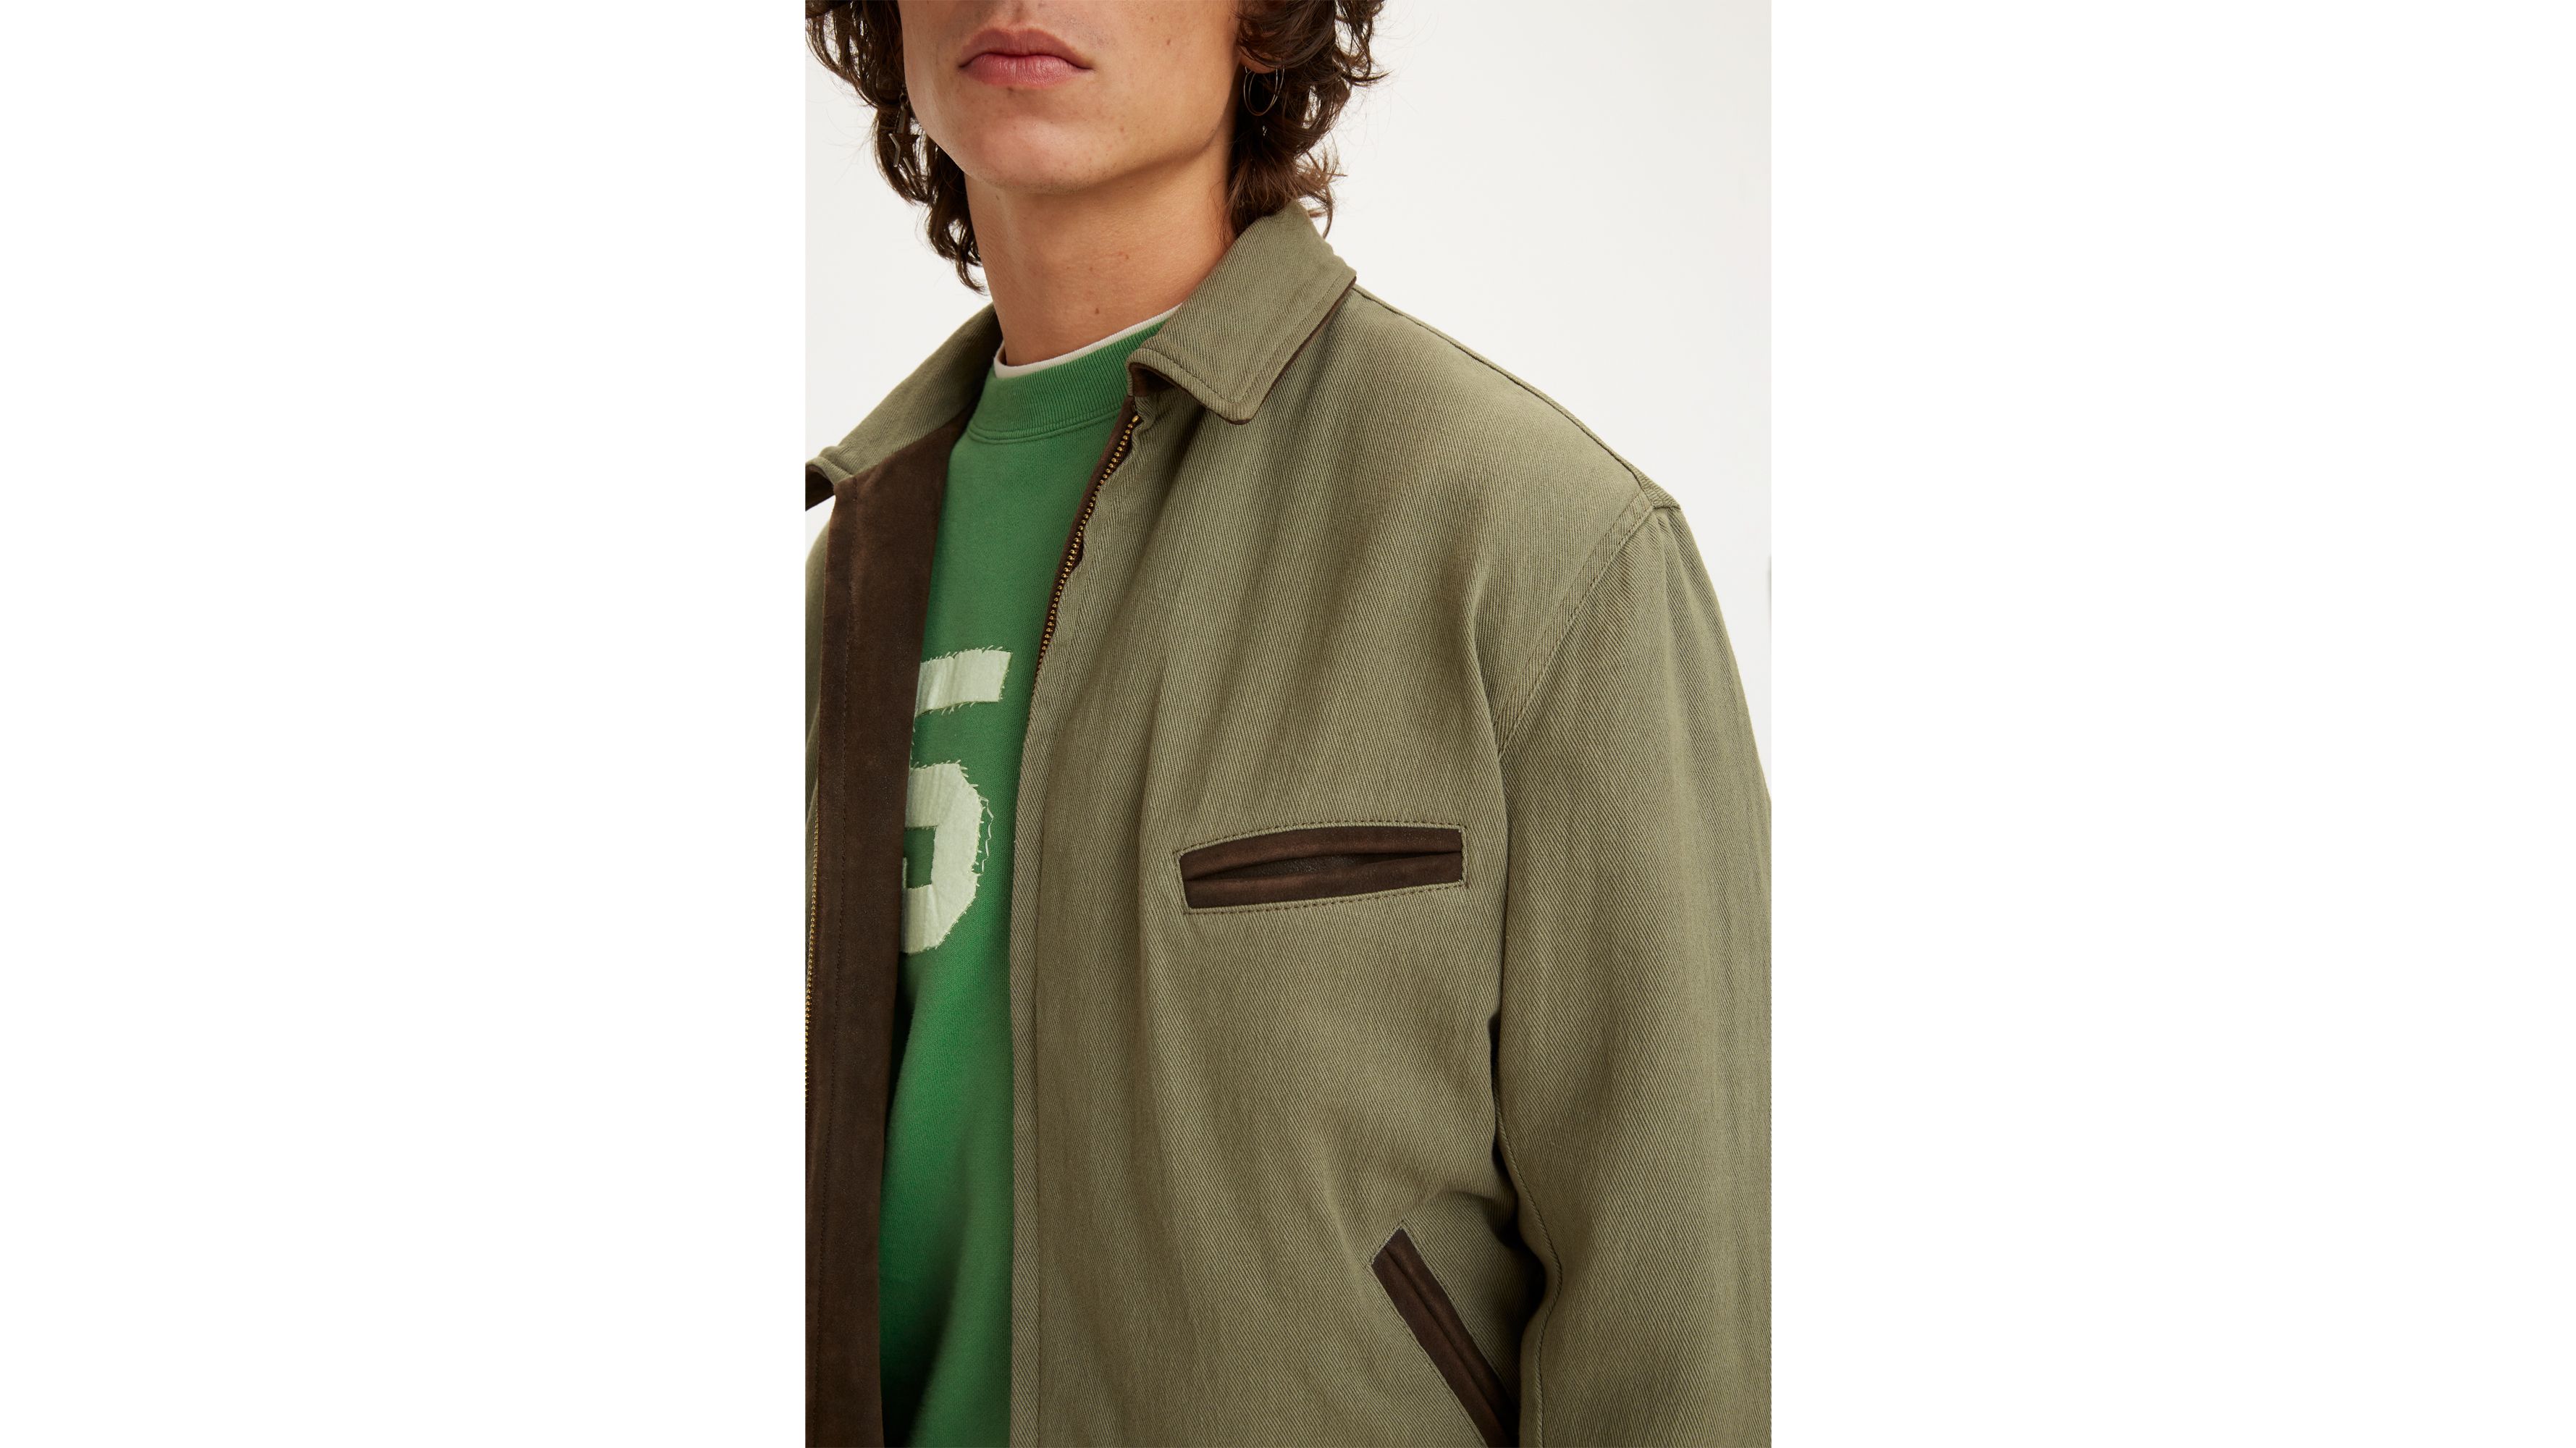 levis vintage clothing lvc jacket